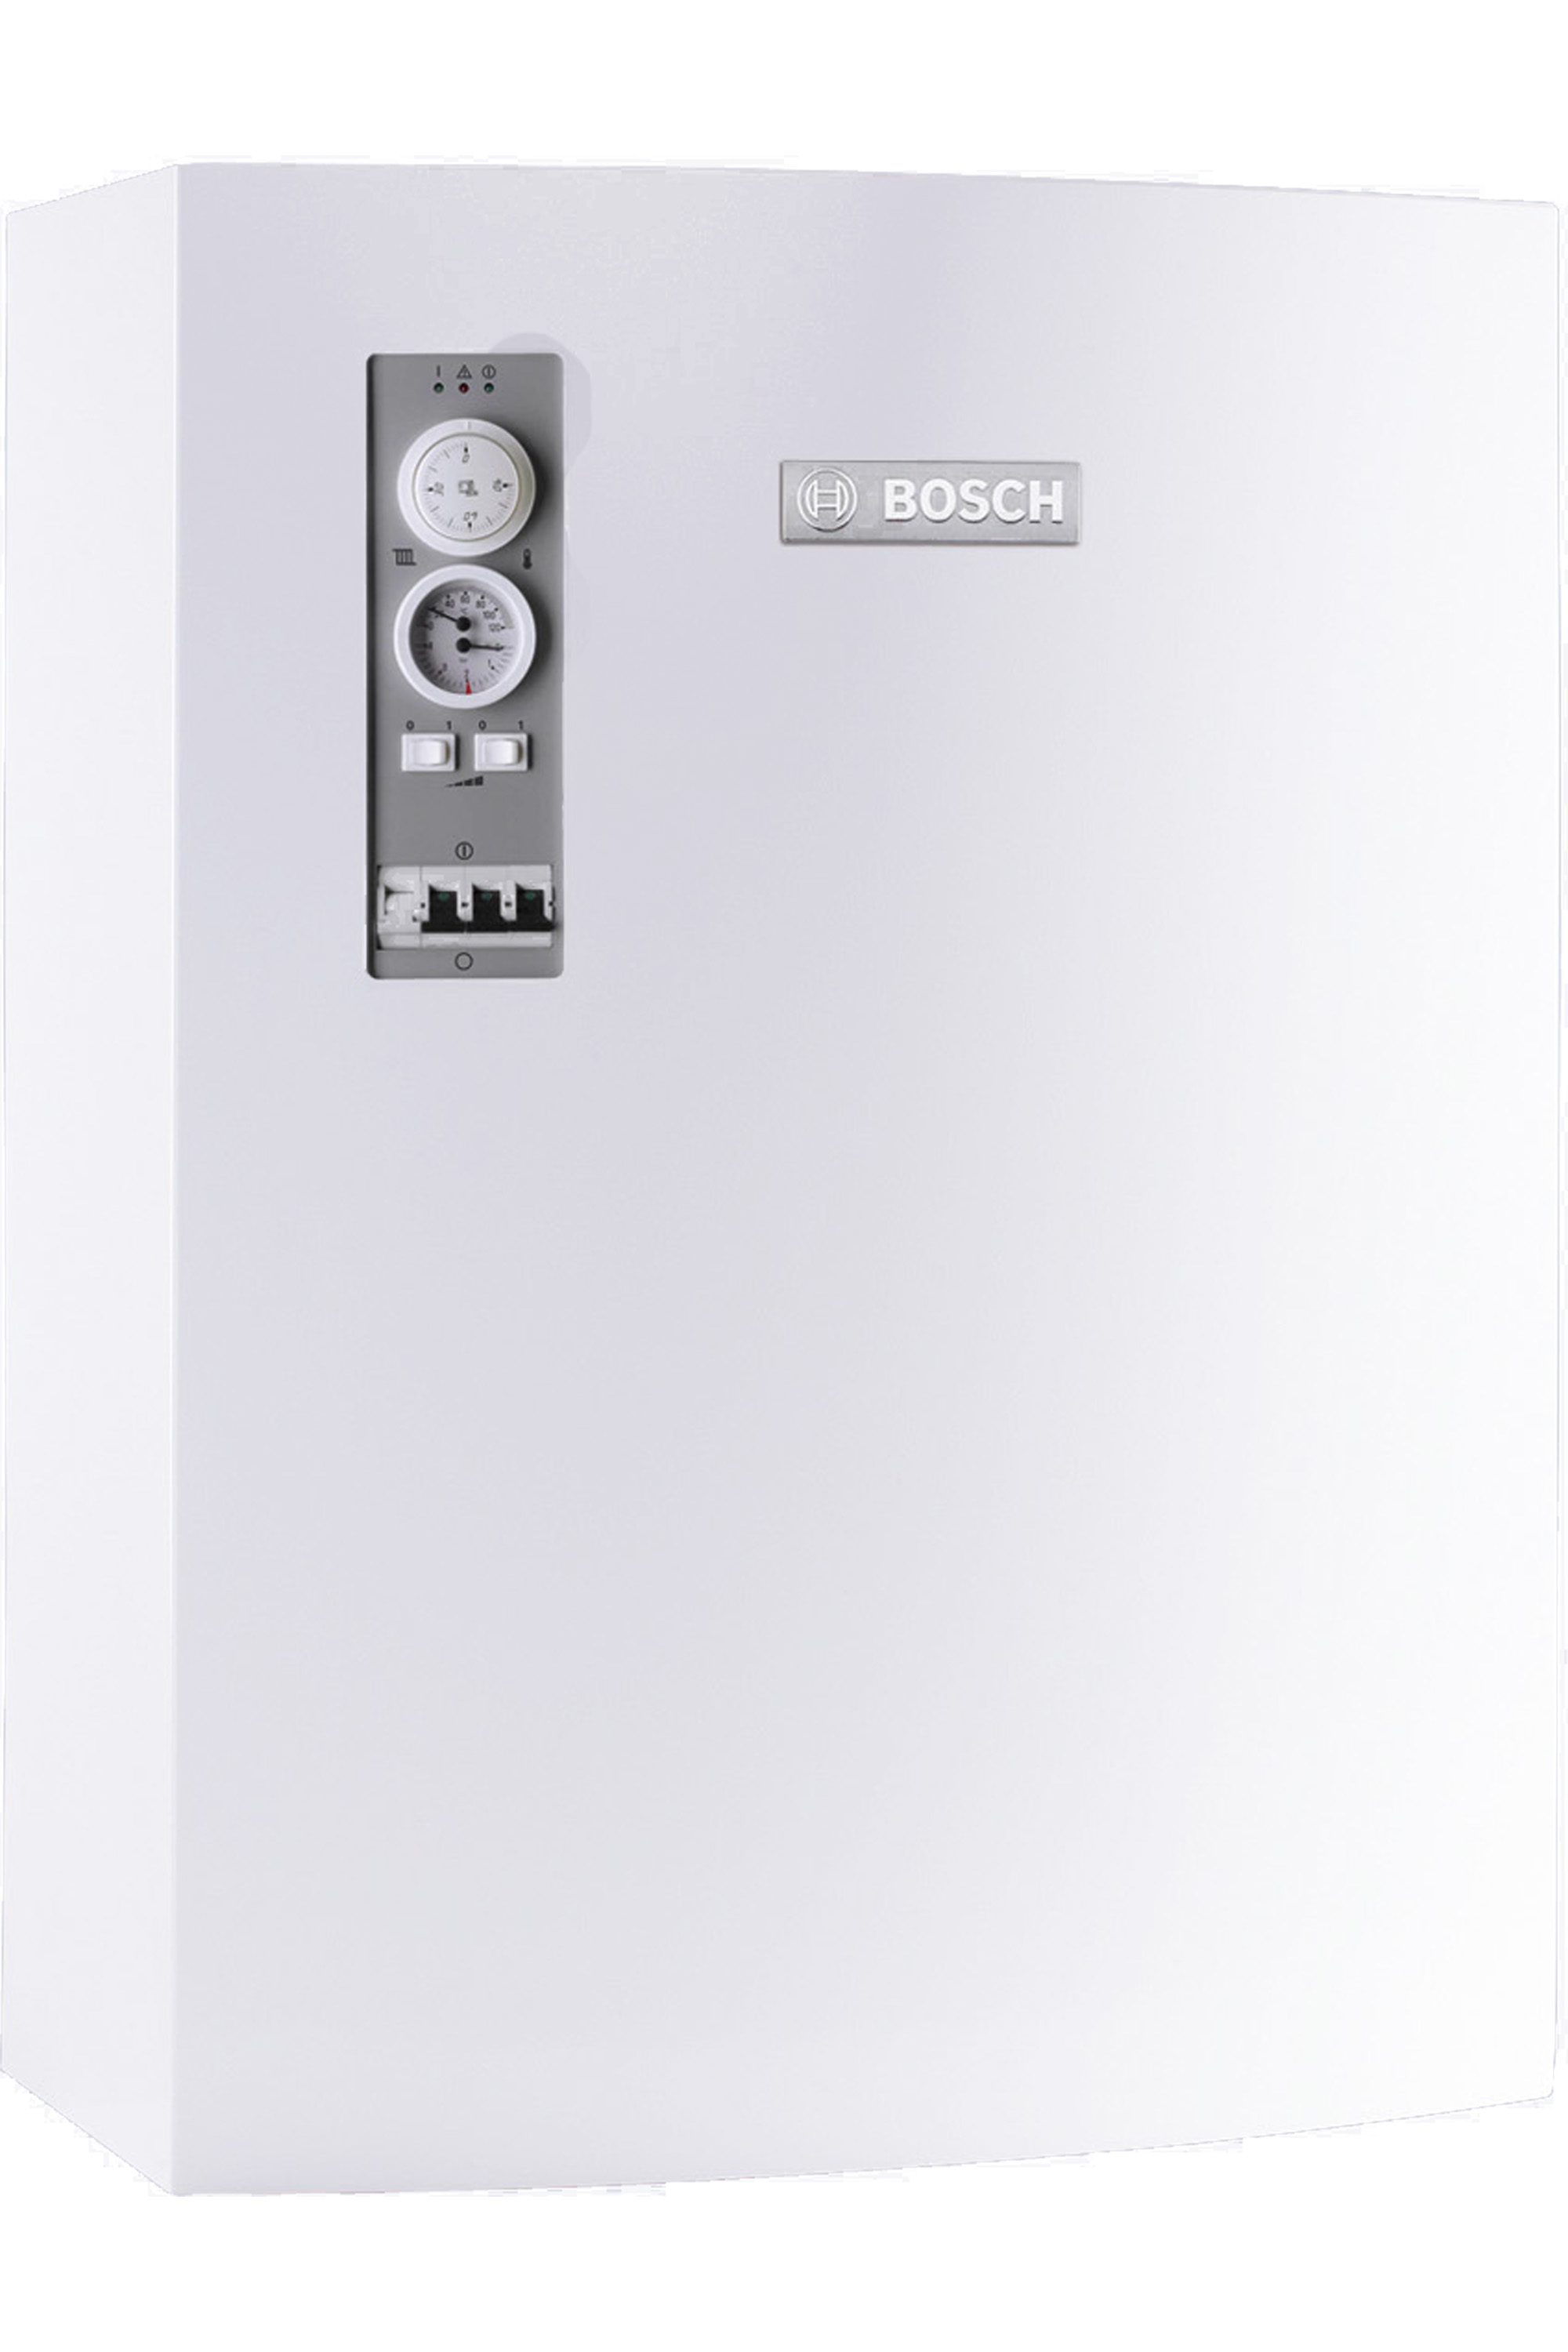 Bosch Tronic 5000 H 36kW